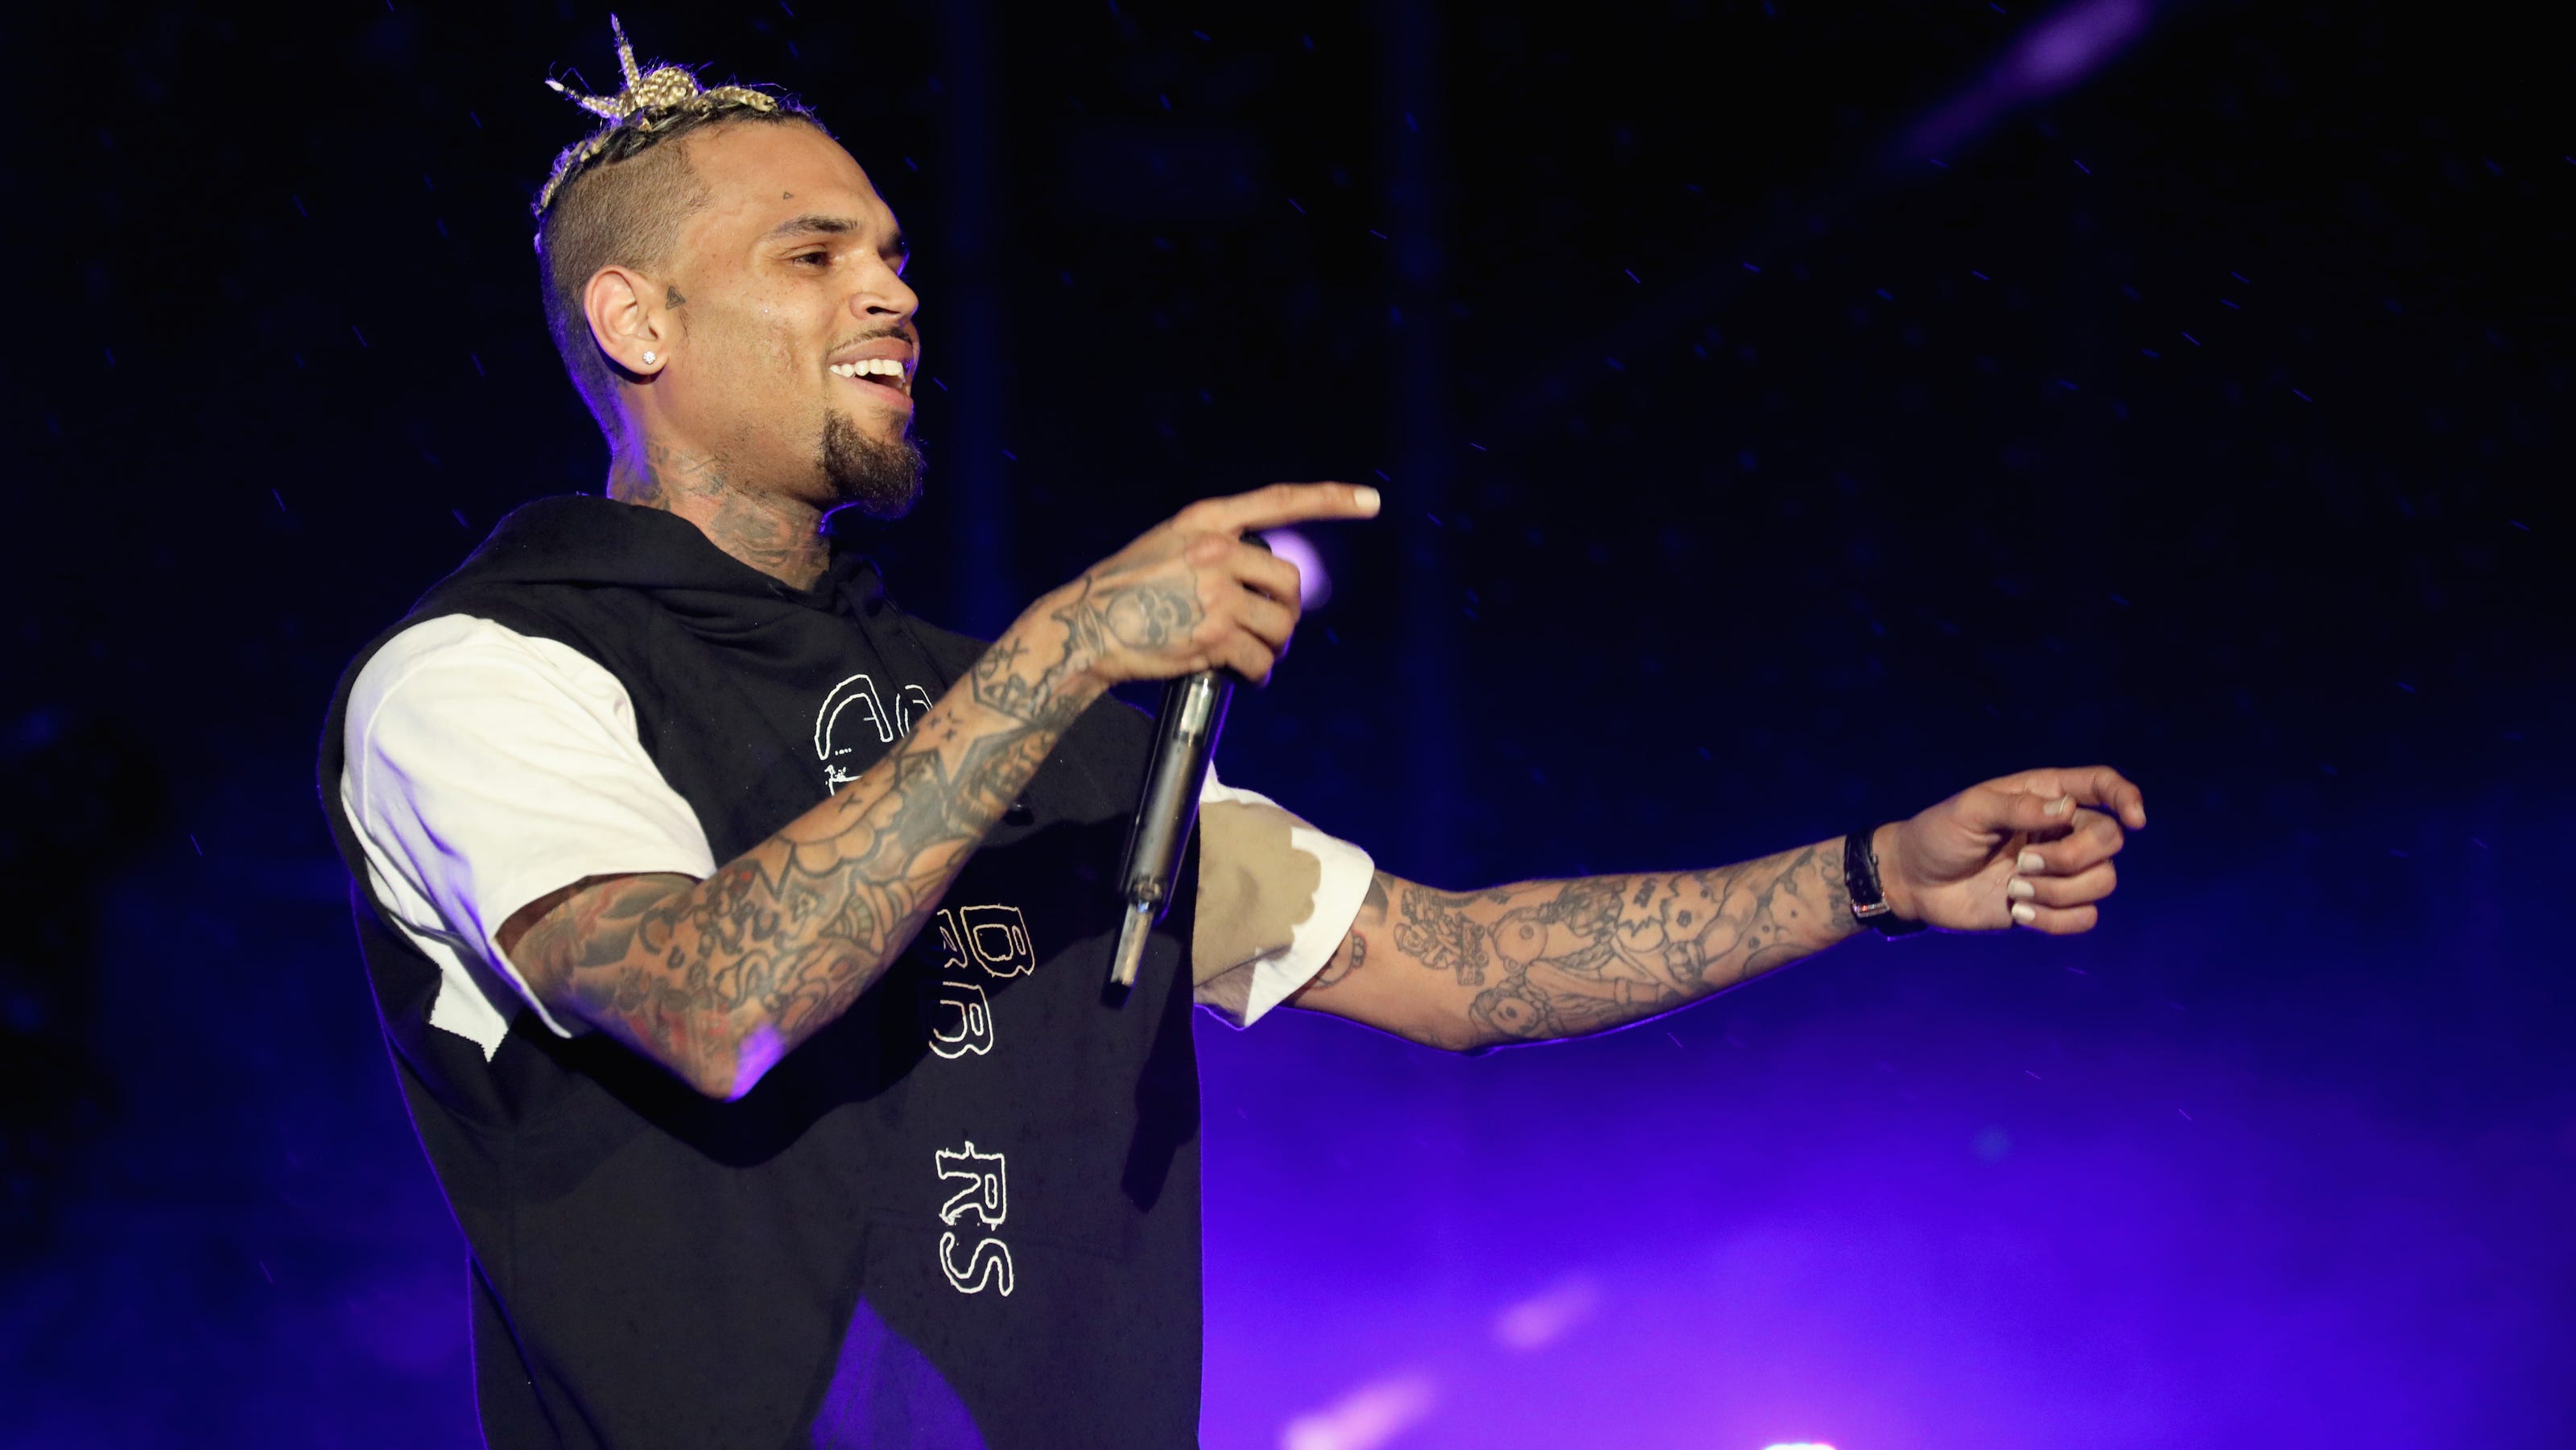 Chris Brown to bring 'INDIGOAT' tour to Indianapolis